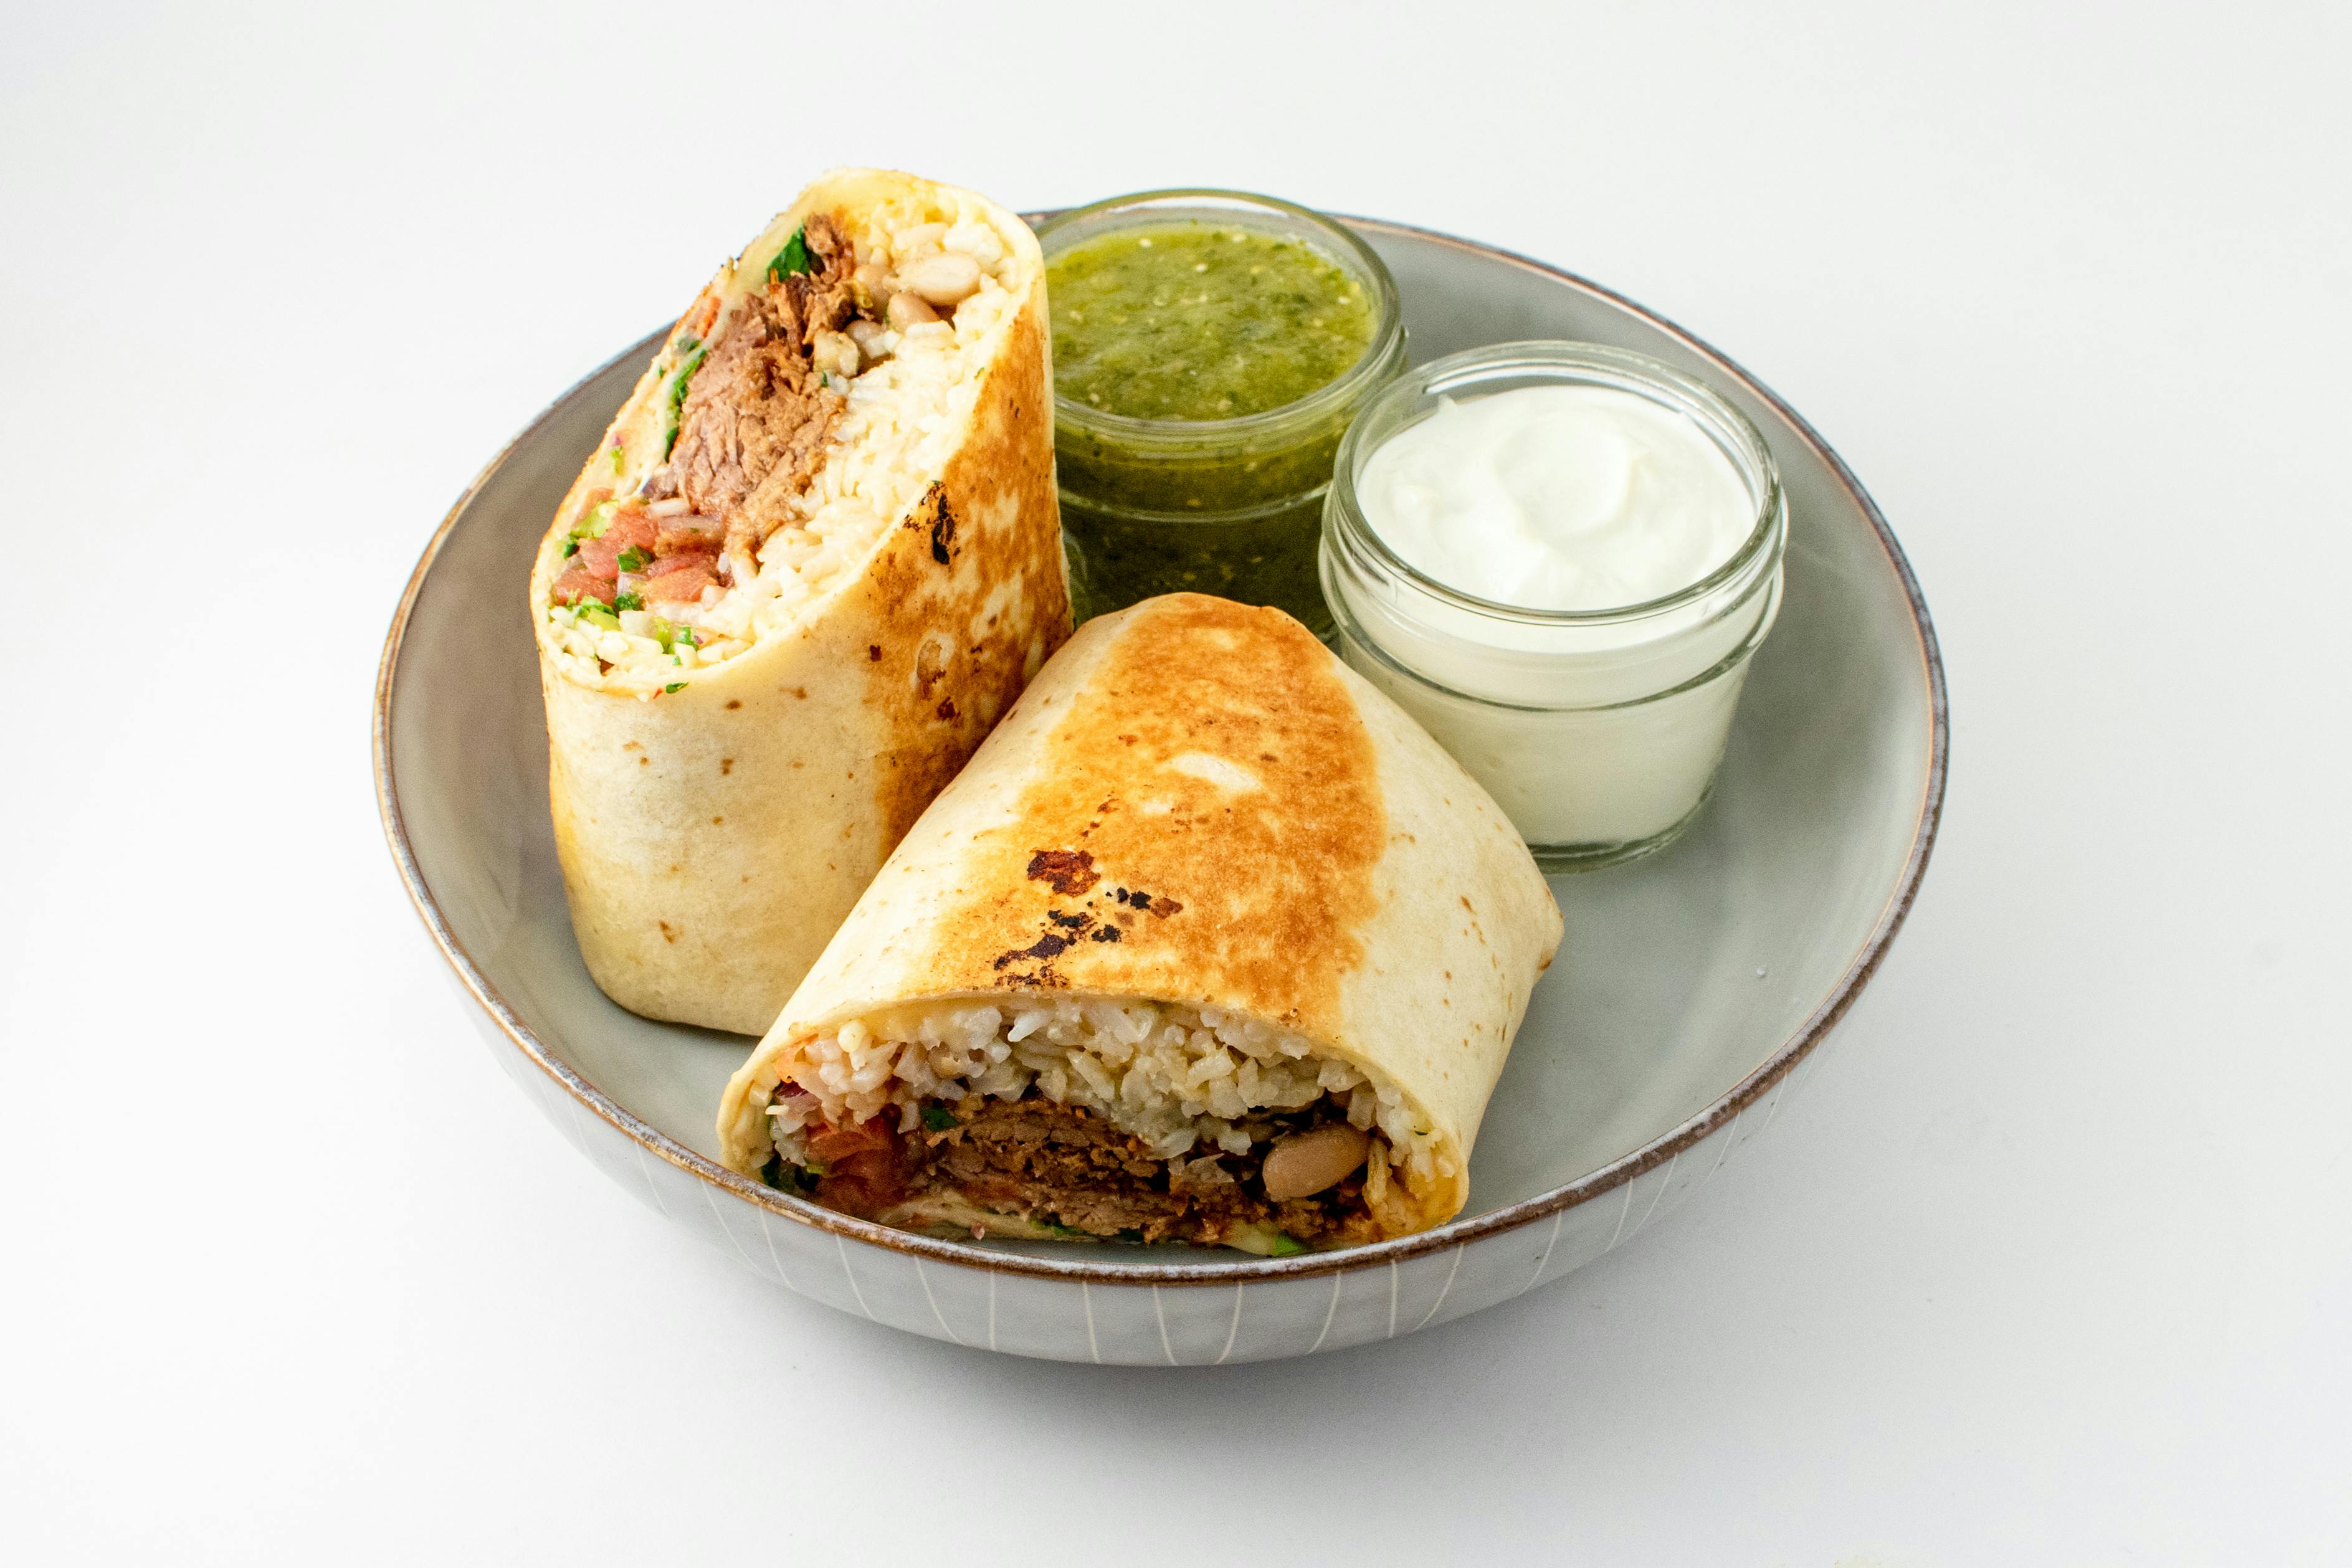 12 Hour Brisket Burrito from Taco Royale - University Ave in Cedar Falls, IA